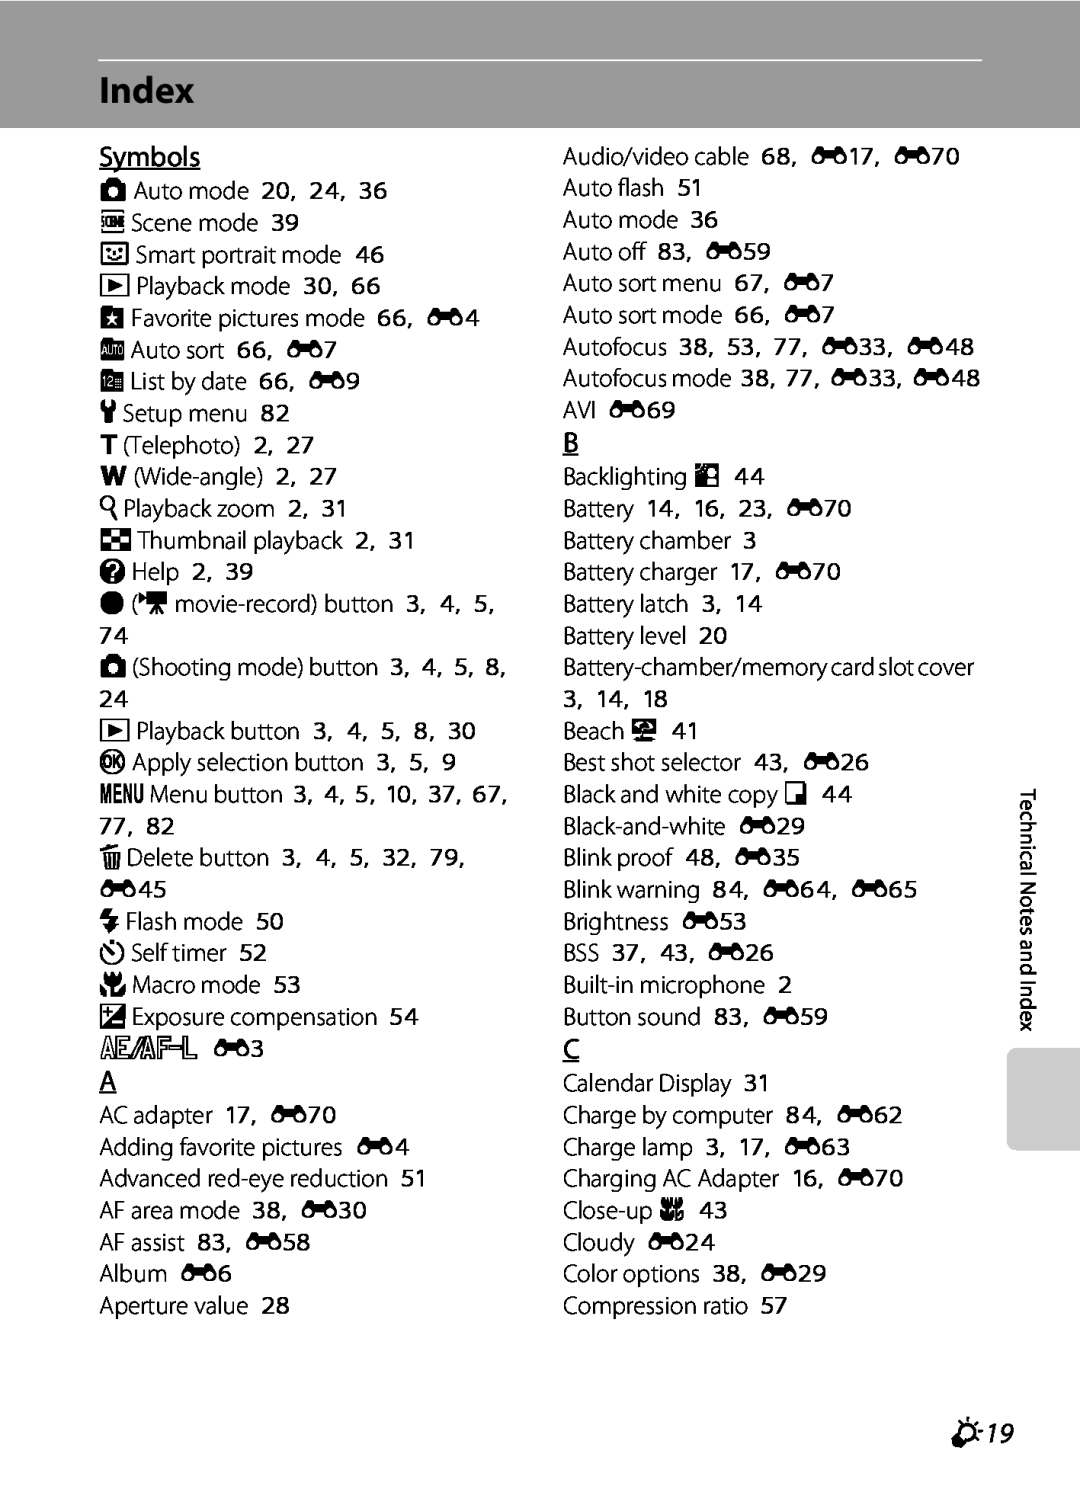 Nikon S2600 manual Index, Symbols 